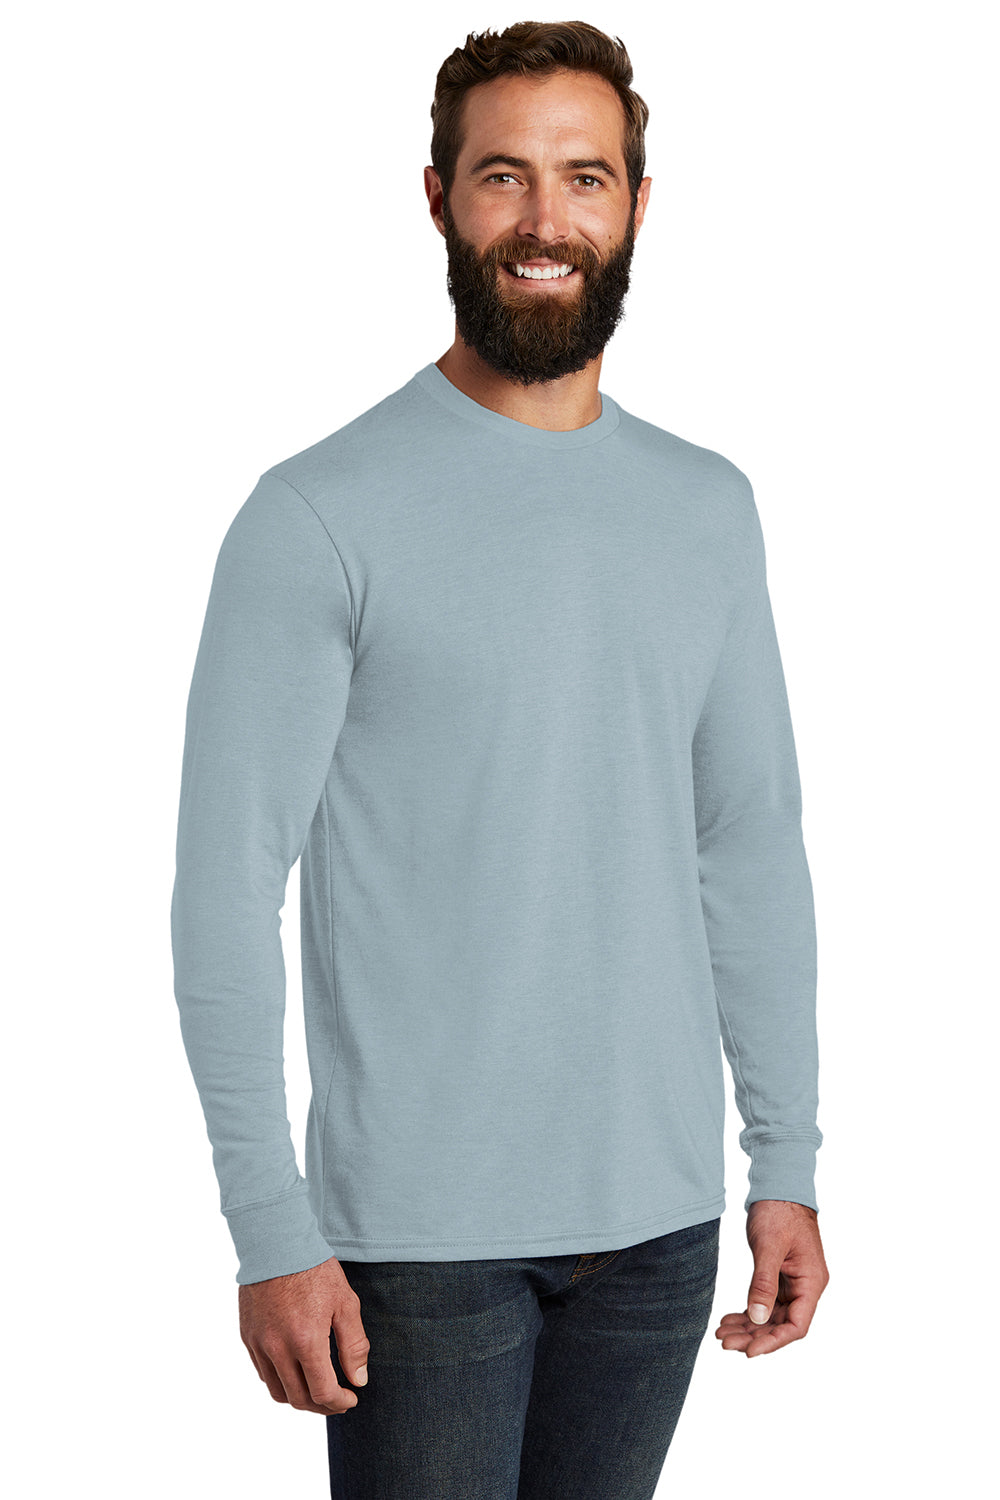 Allmade AL6004 Mens Long Sleeve Crewneck T-Shirt I Like You Blue Model 3Q